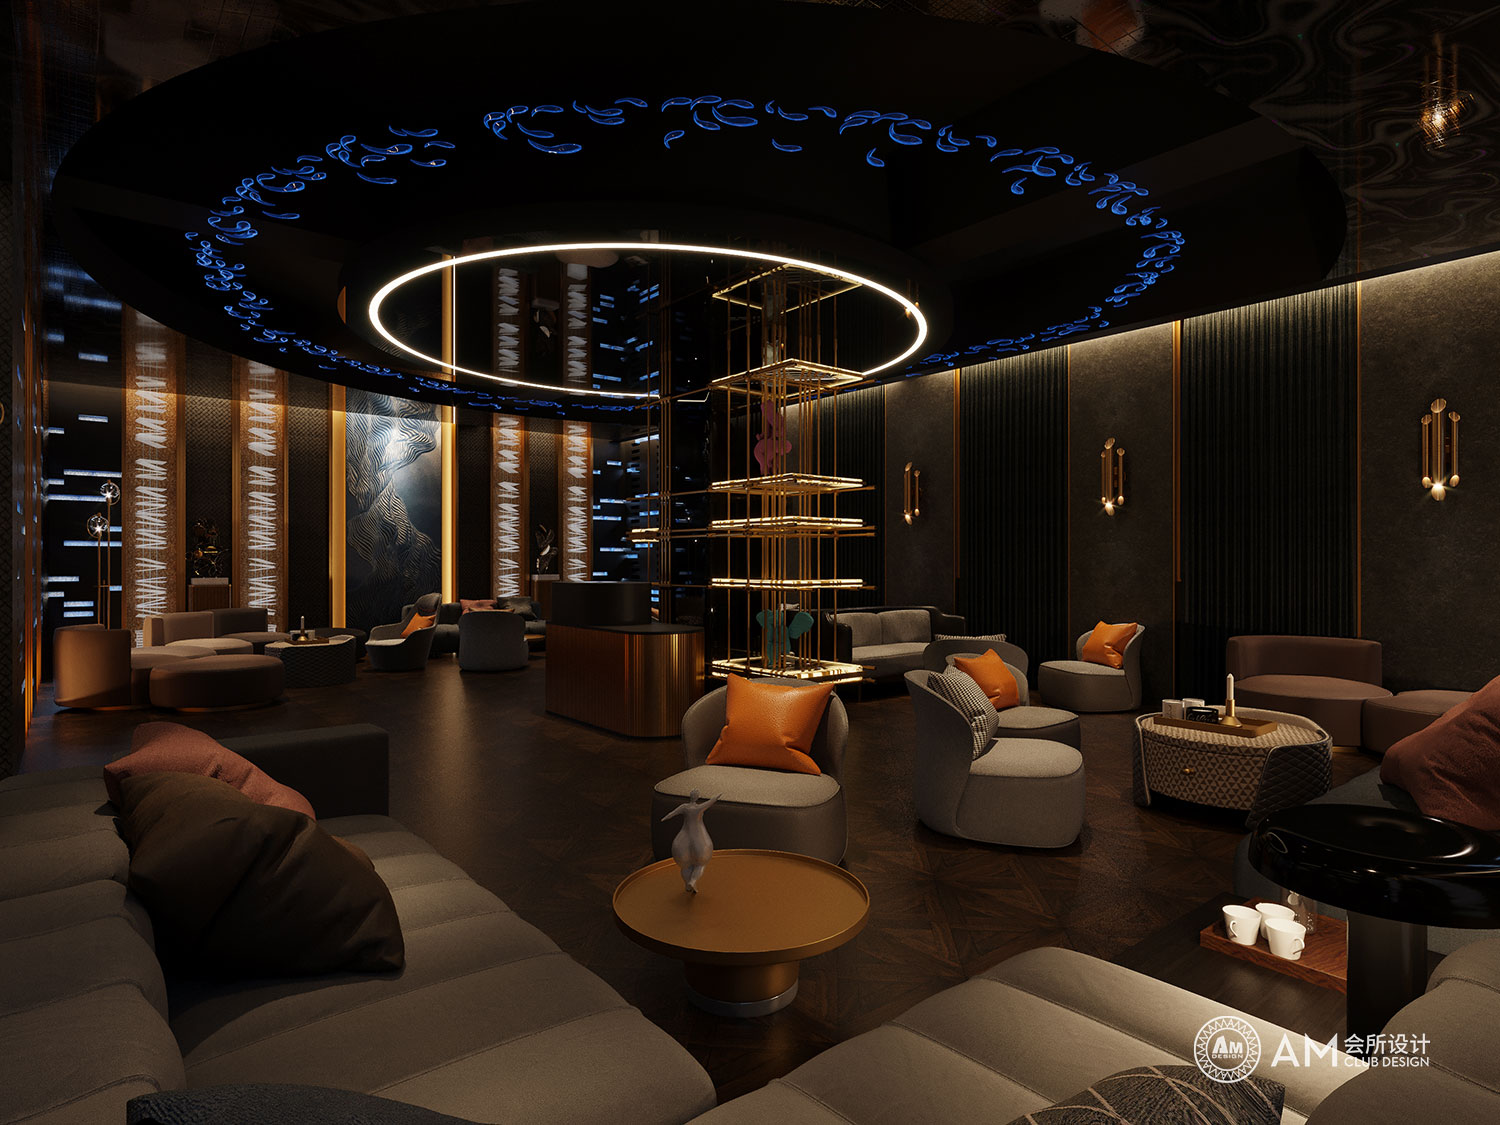 AM DESIGN | Rest area design of lishiyuan Spa Club